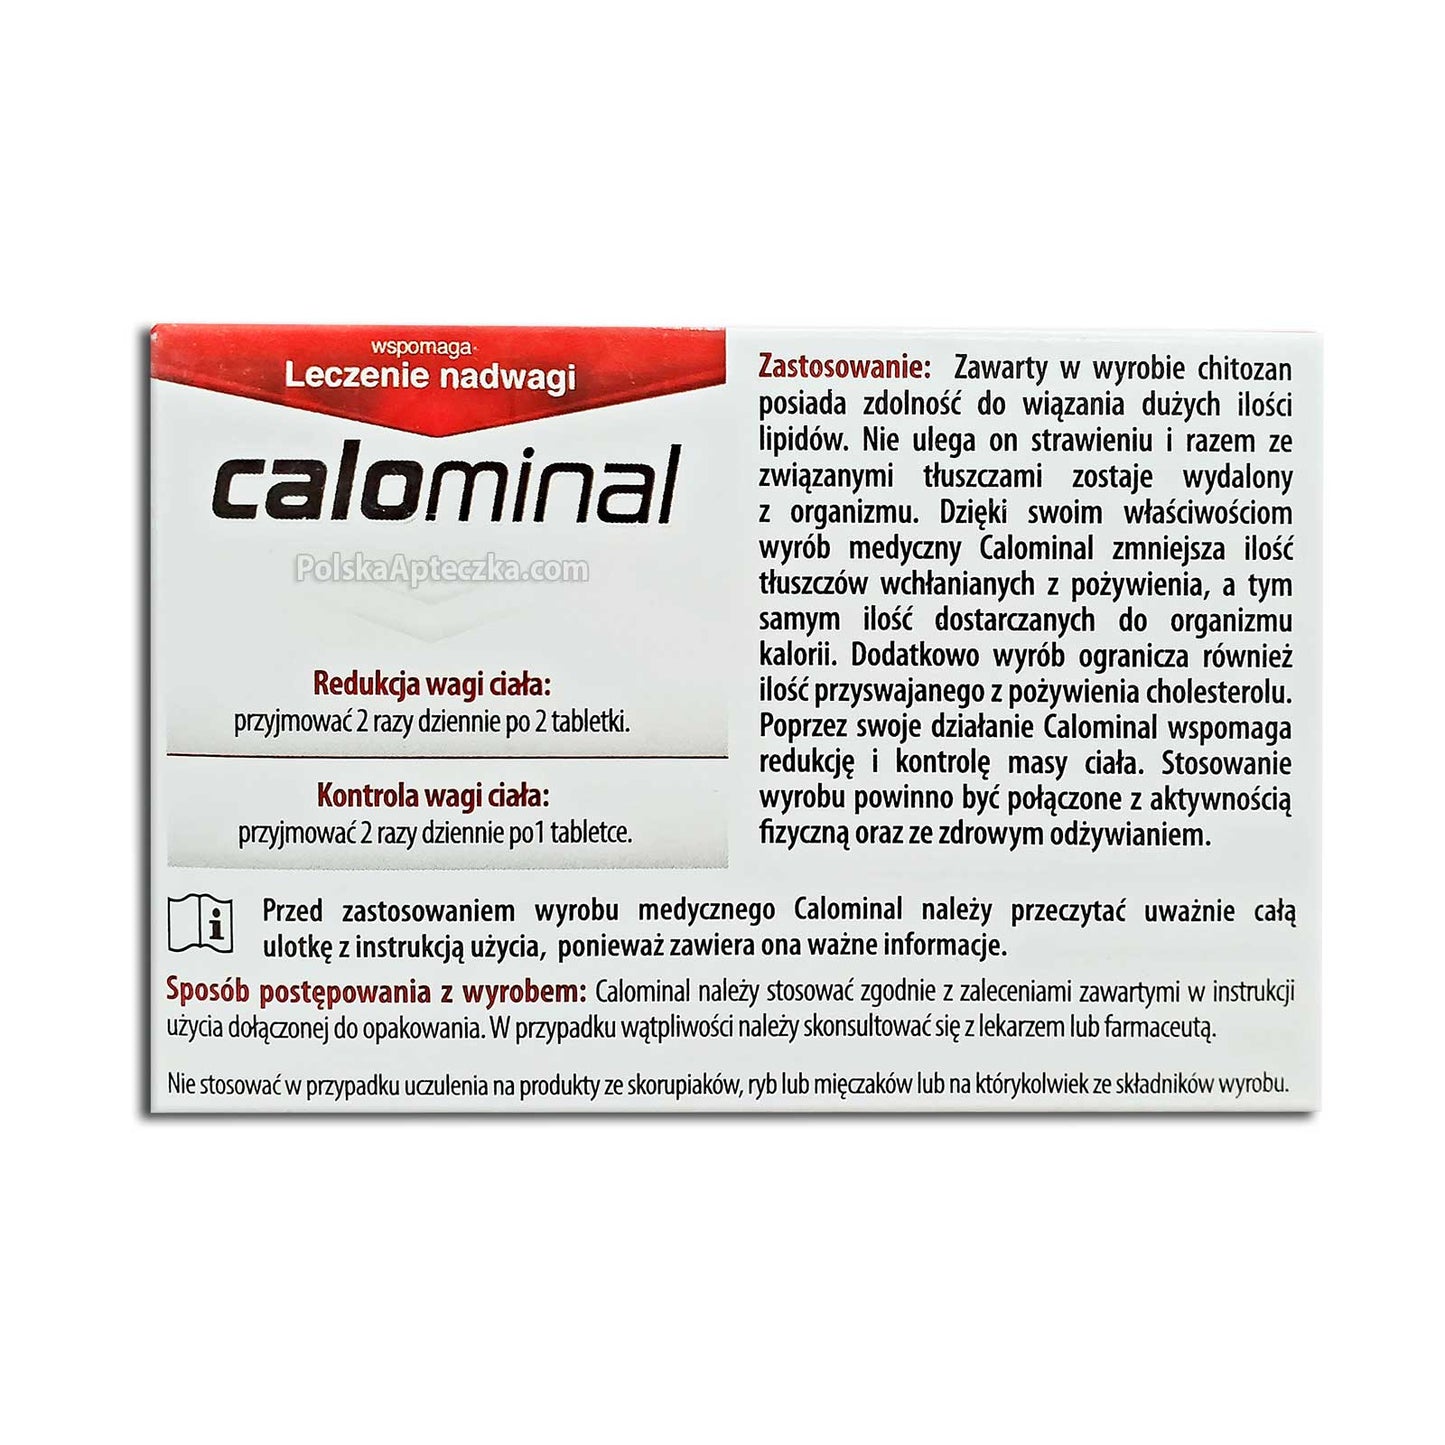 Calominal, wspomaga leczenie nadwagi, 60 tabletek